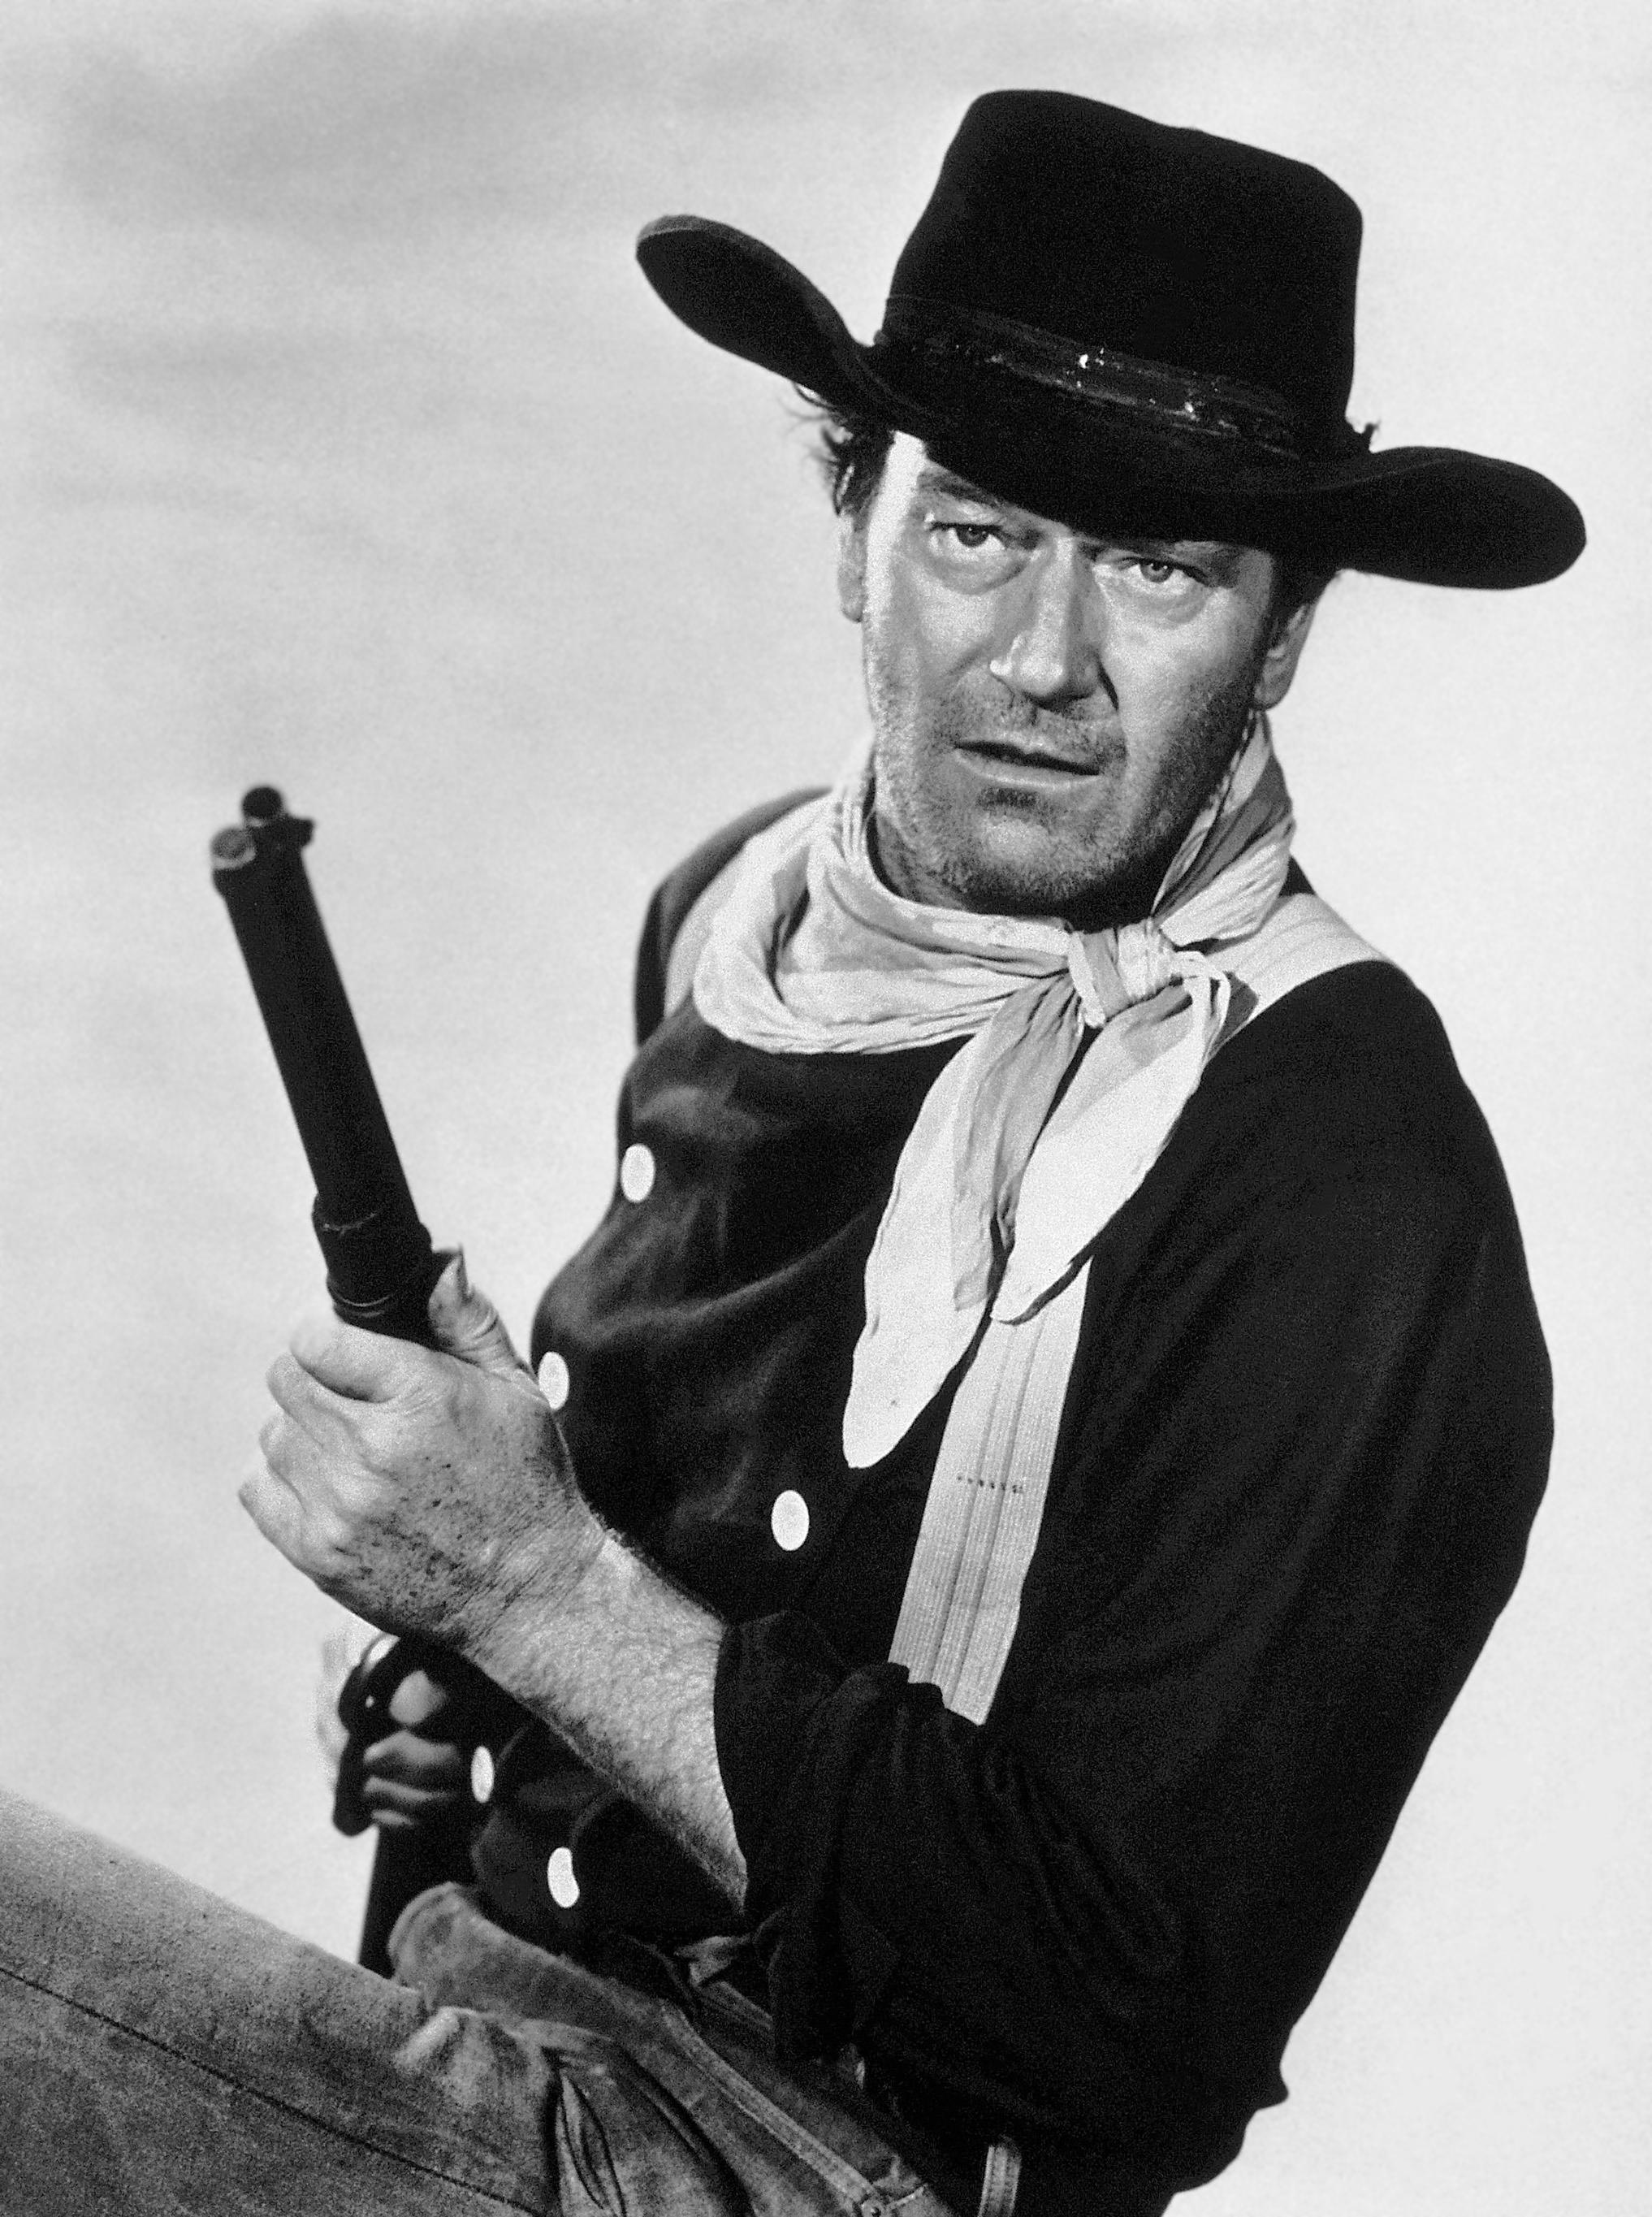 Unknown Black and White Photograph - John Wayne with Gun in "The Searchers" Globe Photos Fine Art Print